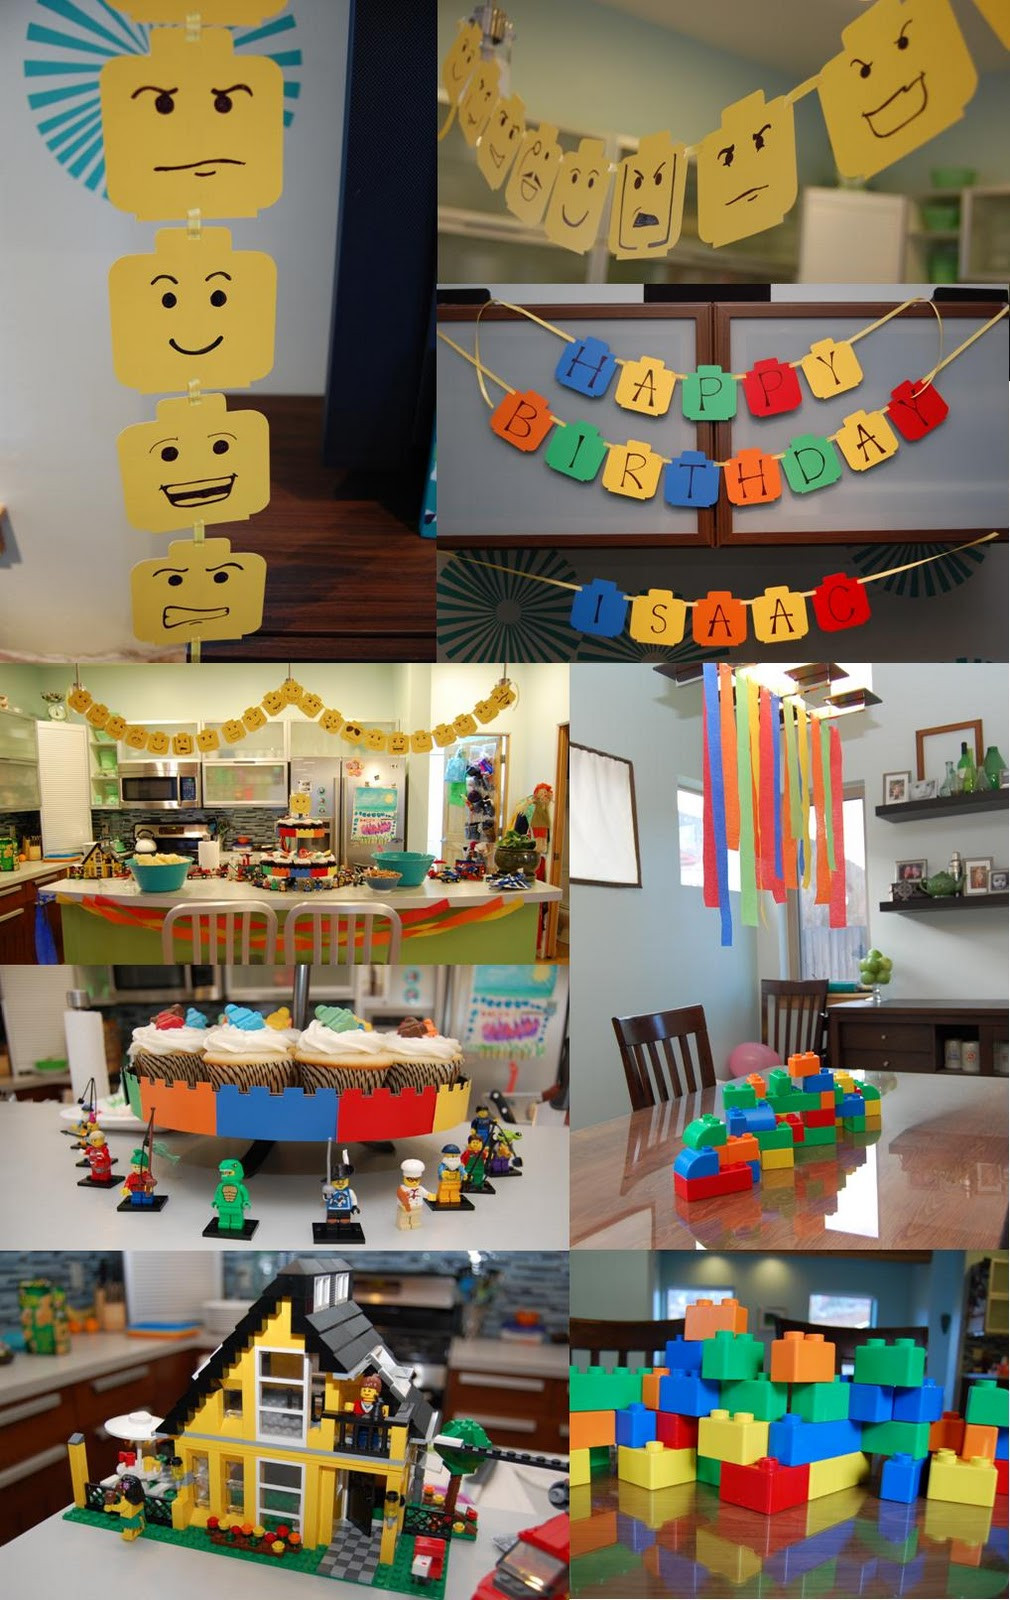 Lego Birthday Decorations
 "C" is for Crafty Lego Birthday Party